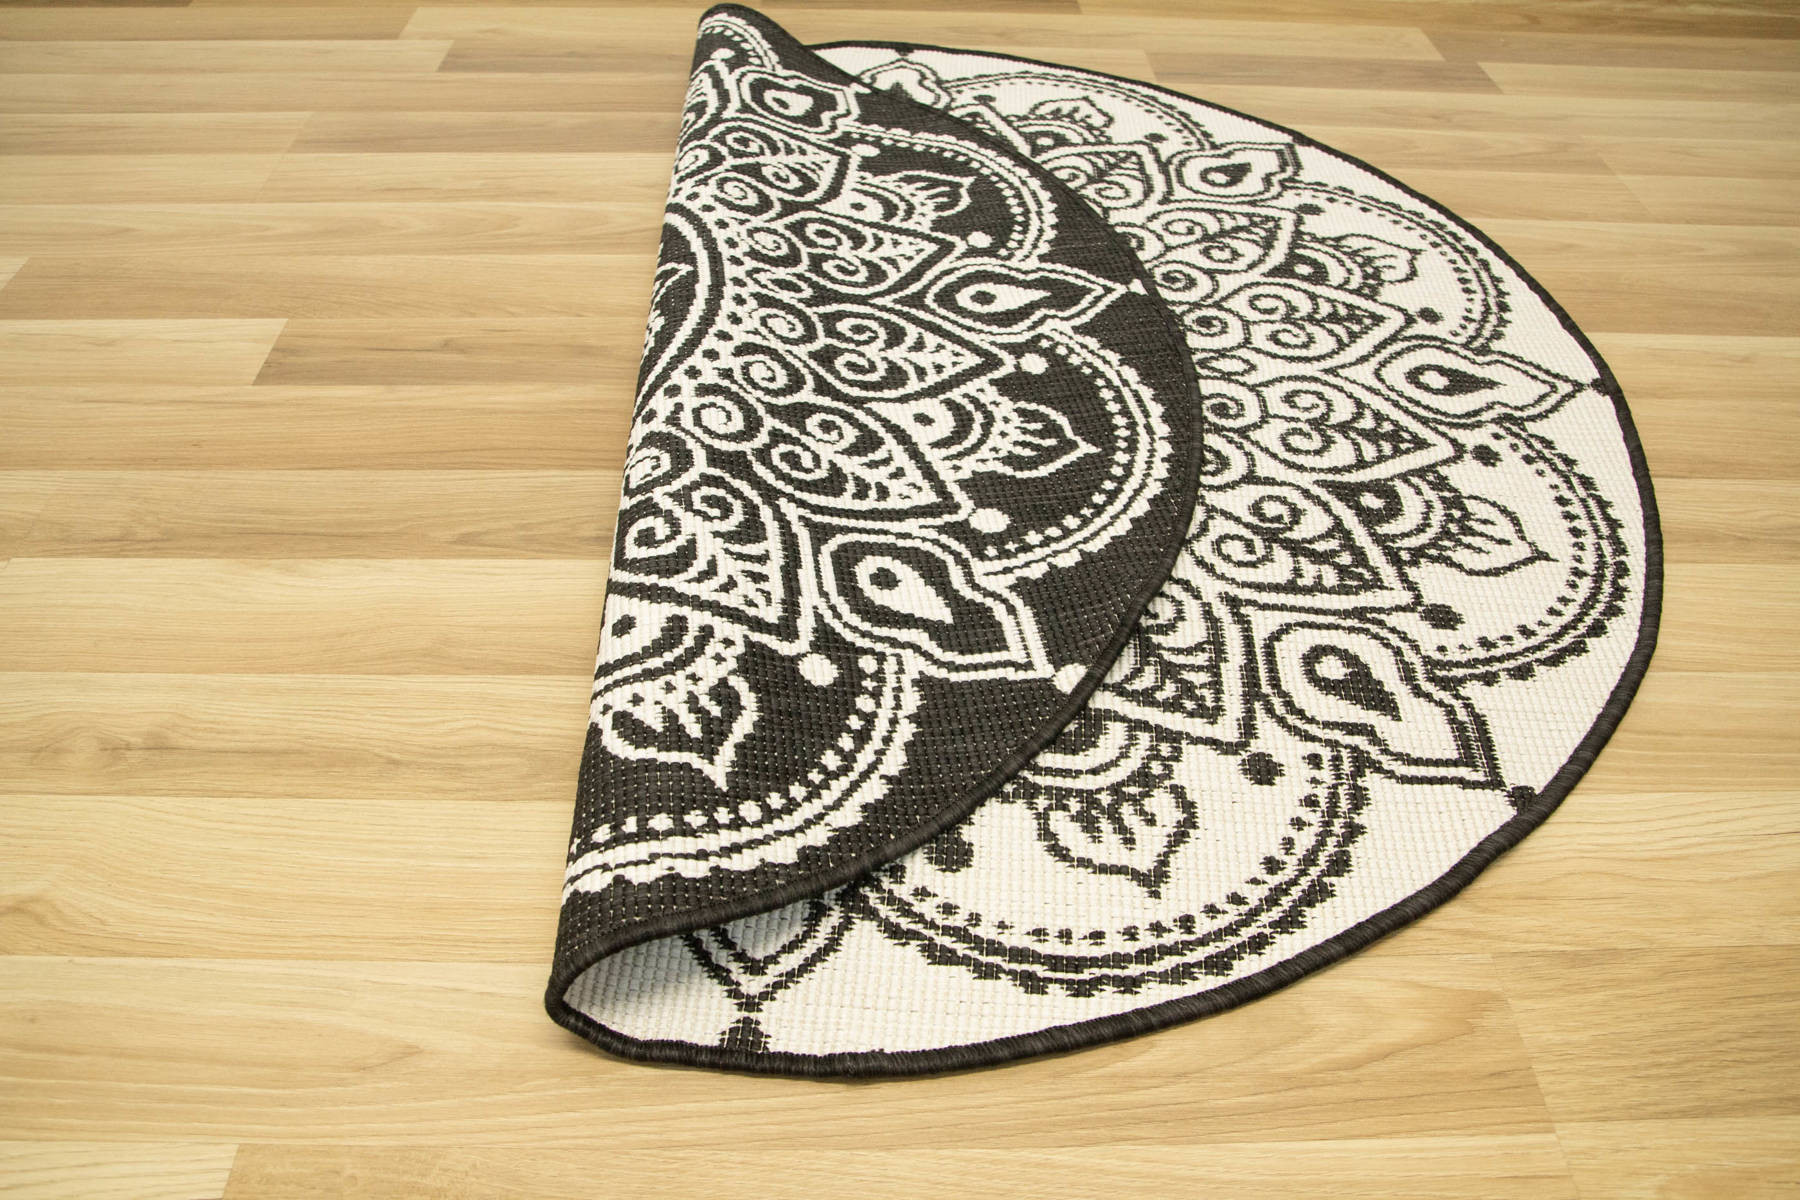 Šňůrkový oboustranný koberec Brussels 205333/10110 antracitový / krémový kruh